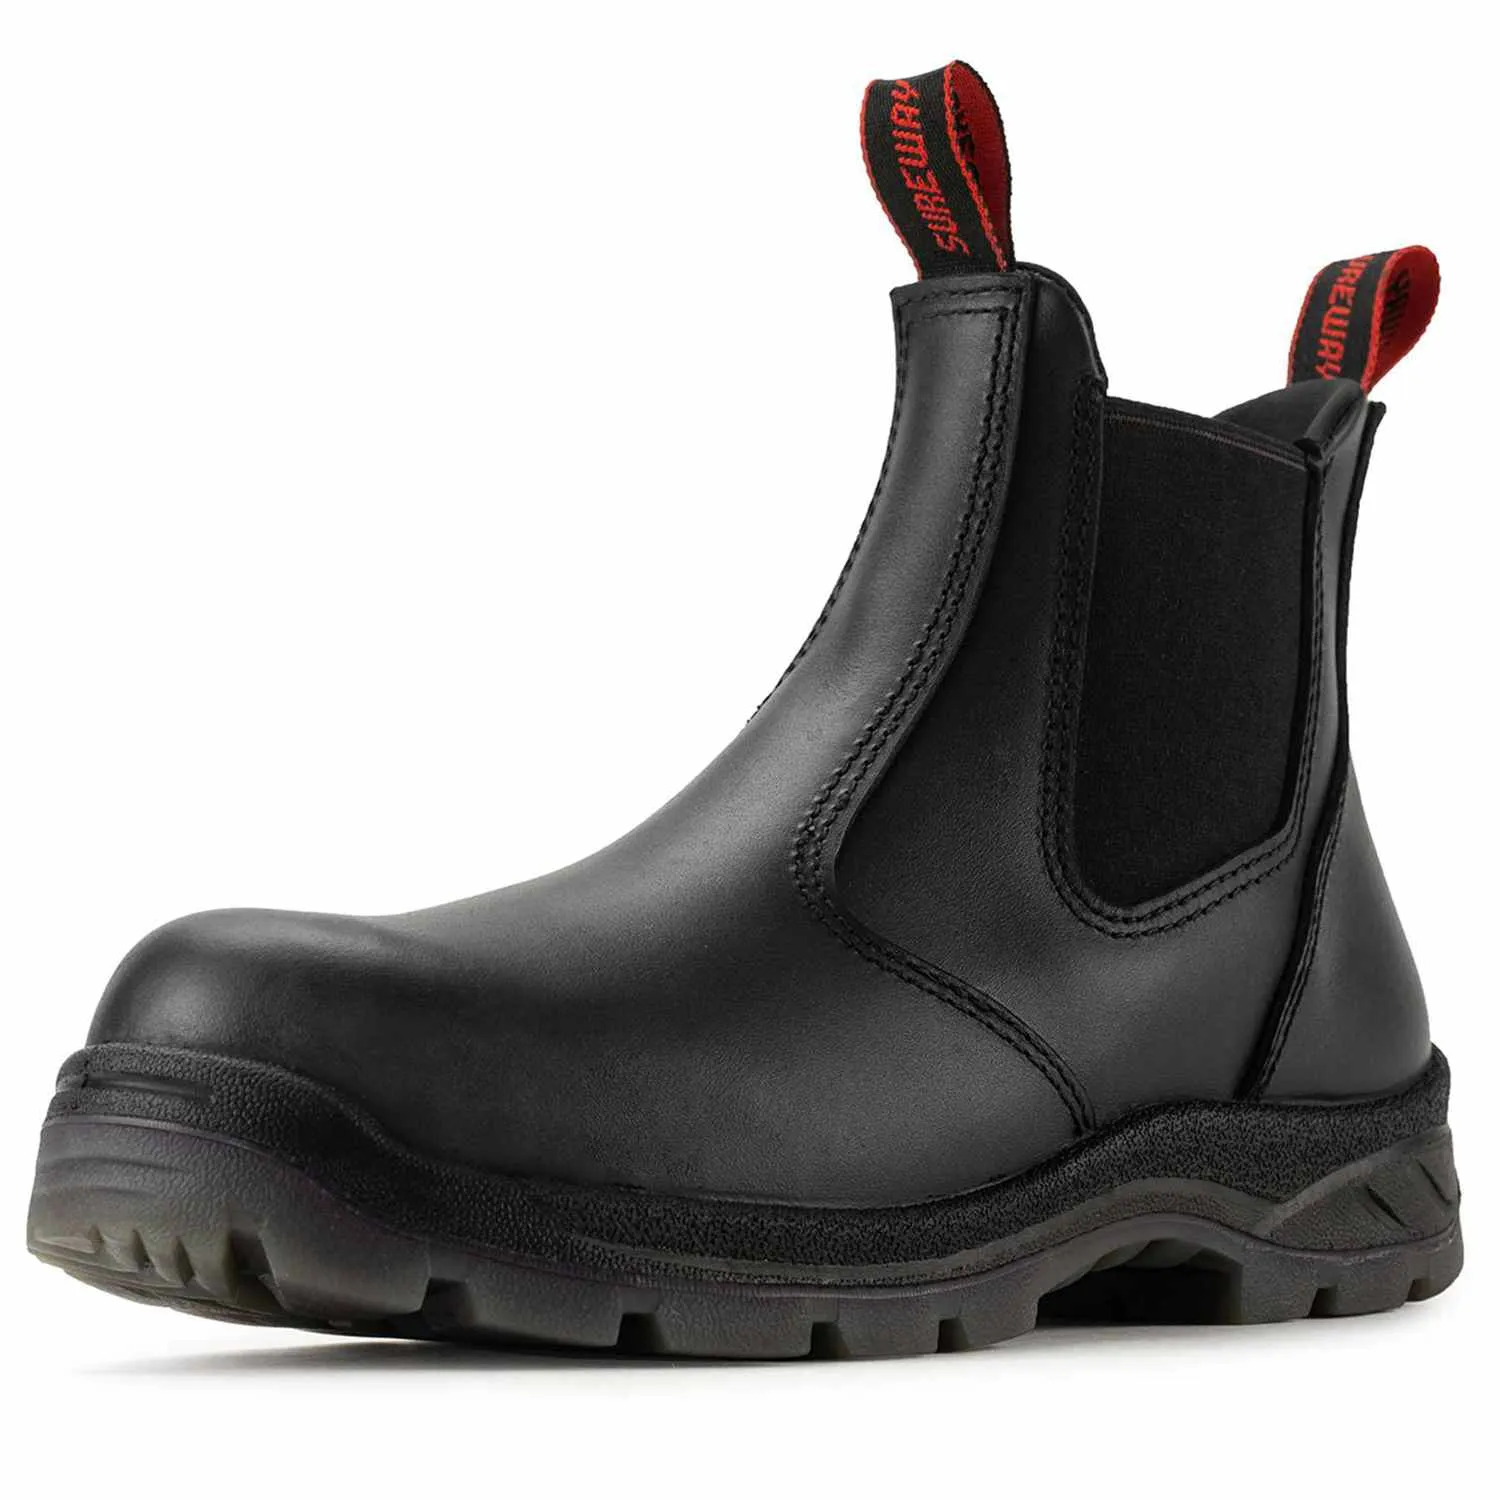 Men's Composite Toe Waterproof Slip on Work Boots | Sureway Safety Work ...